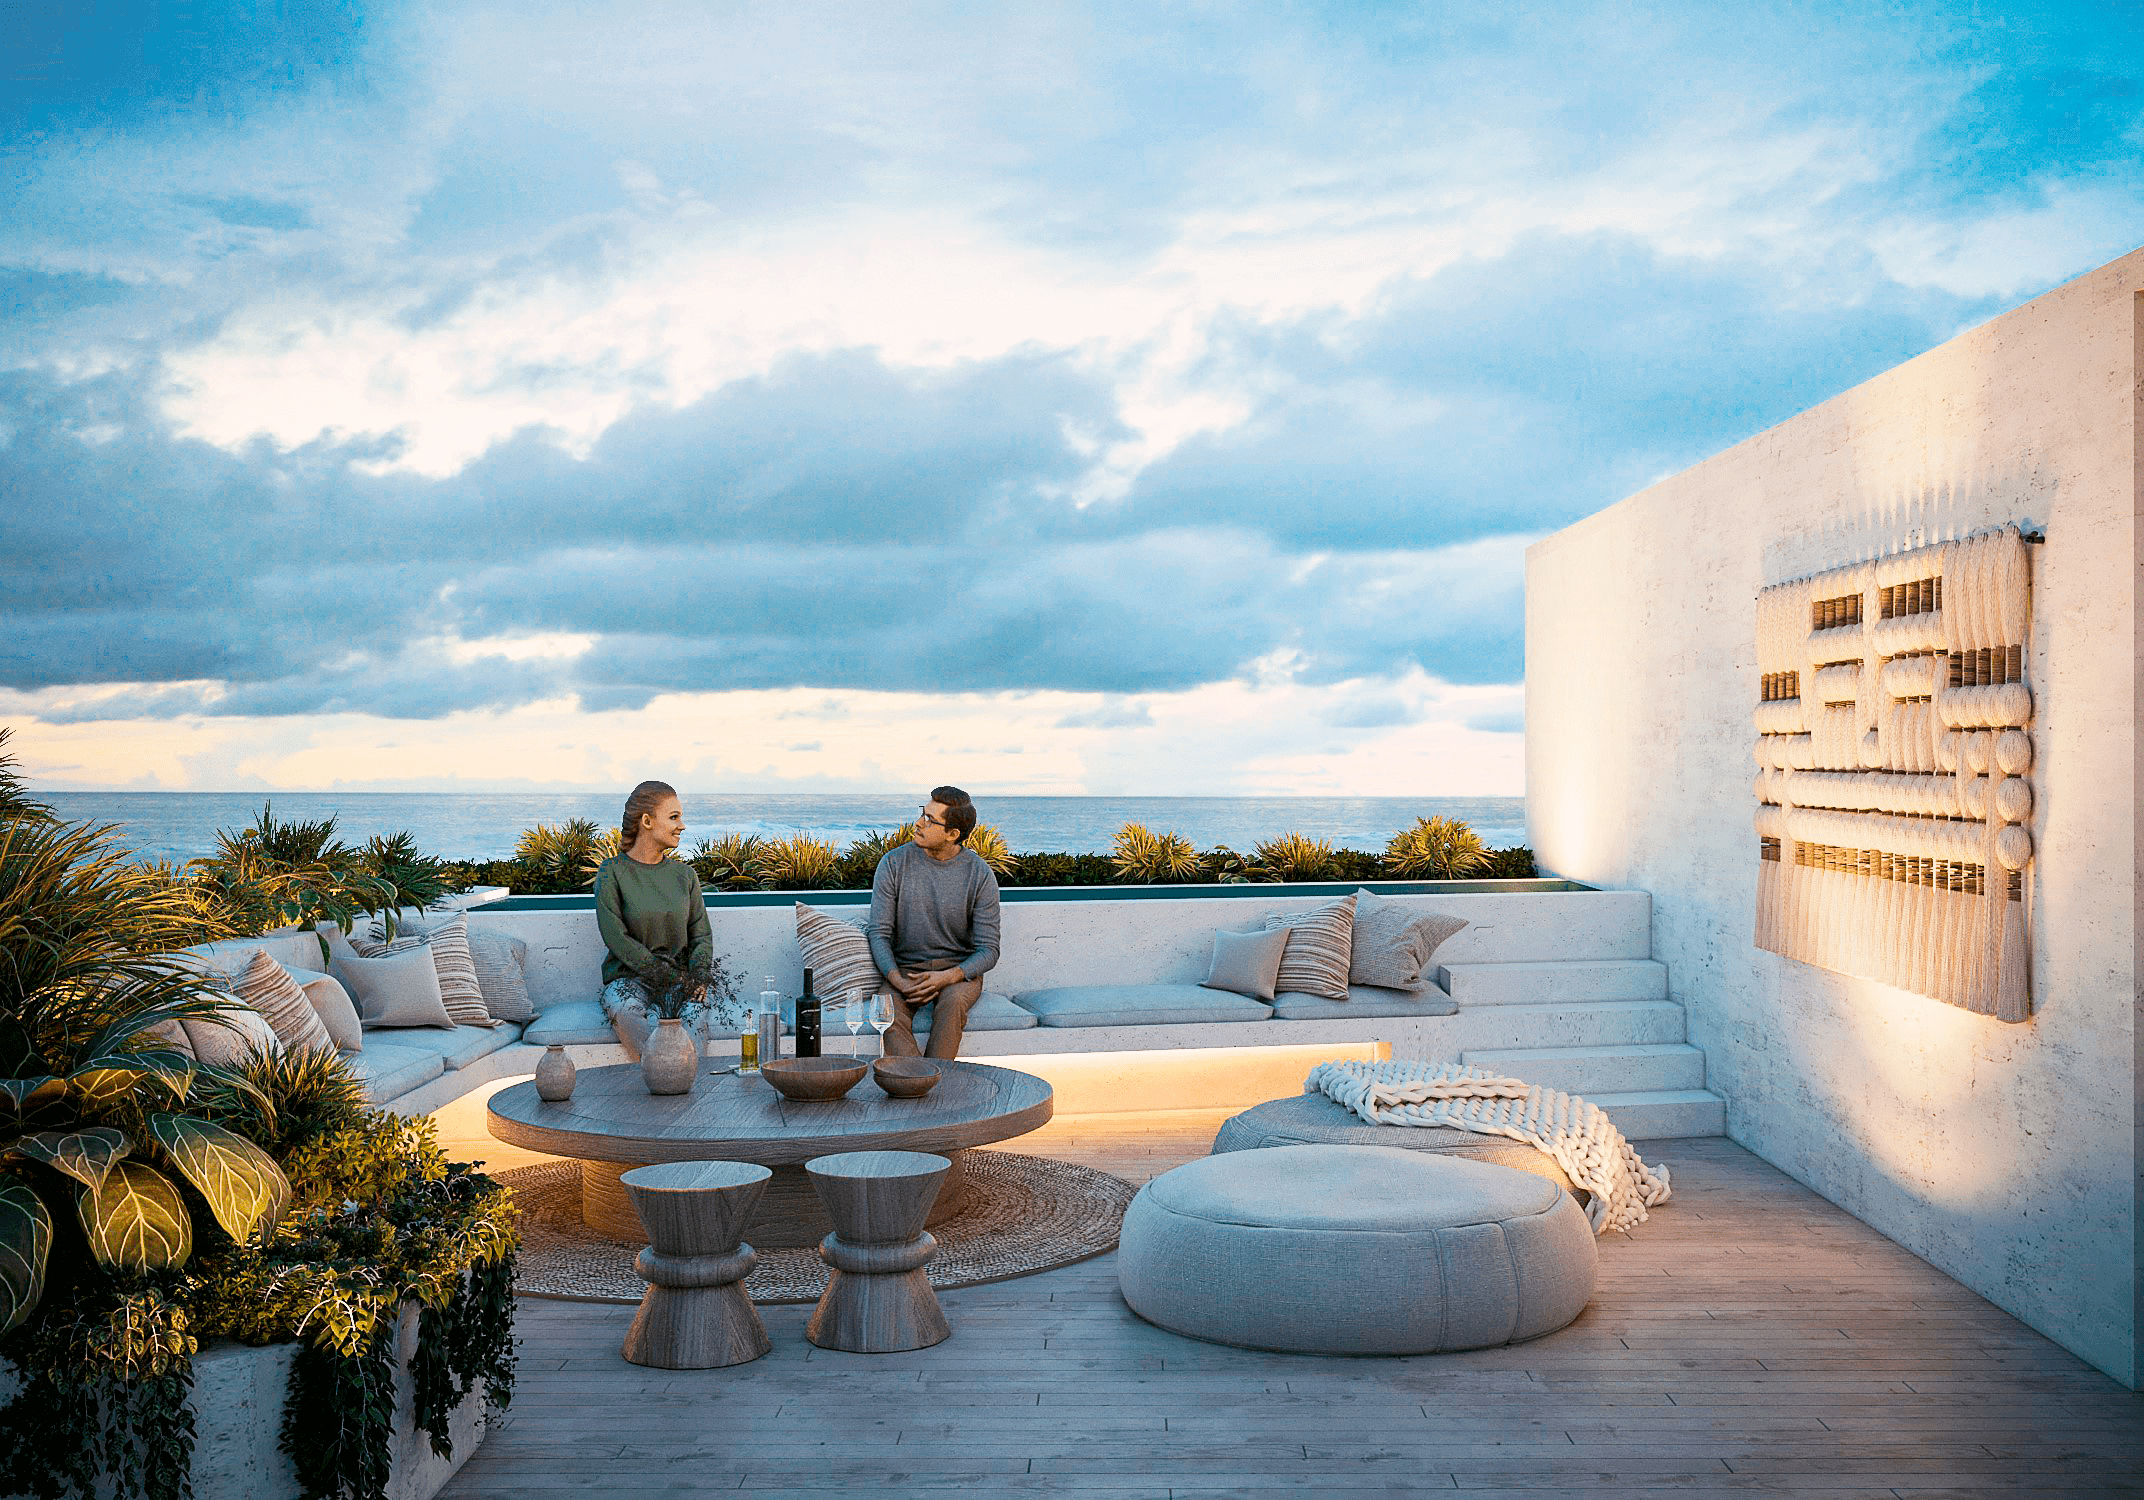 10. Antilia, Cozumel – Rooftop